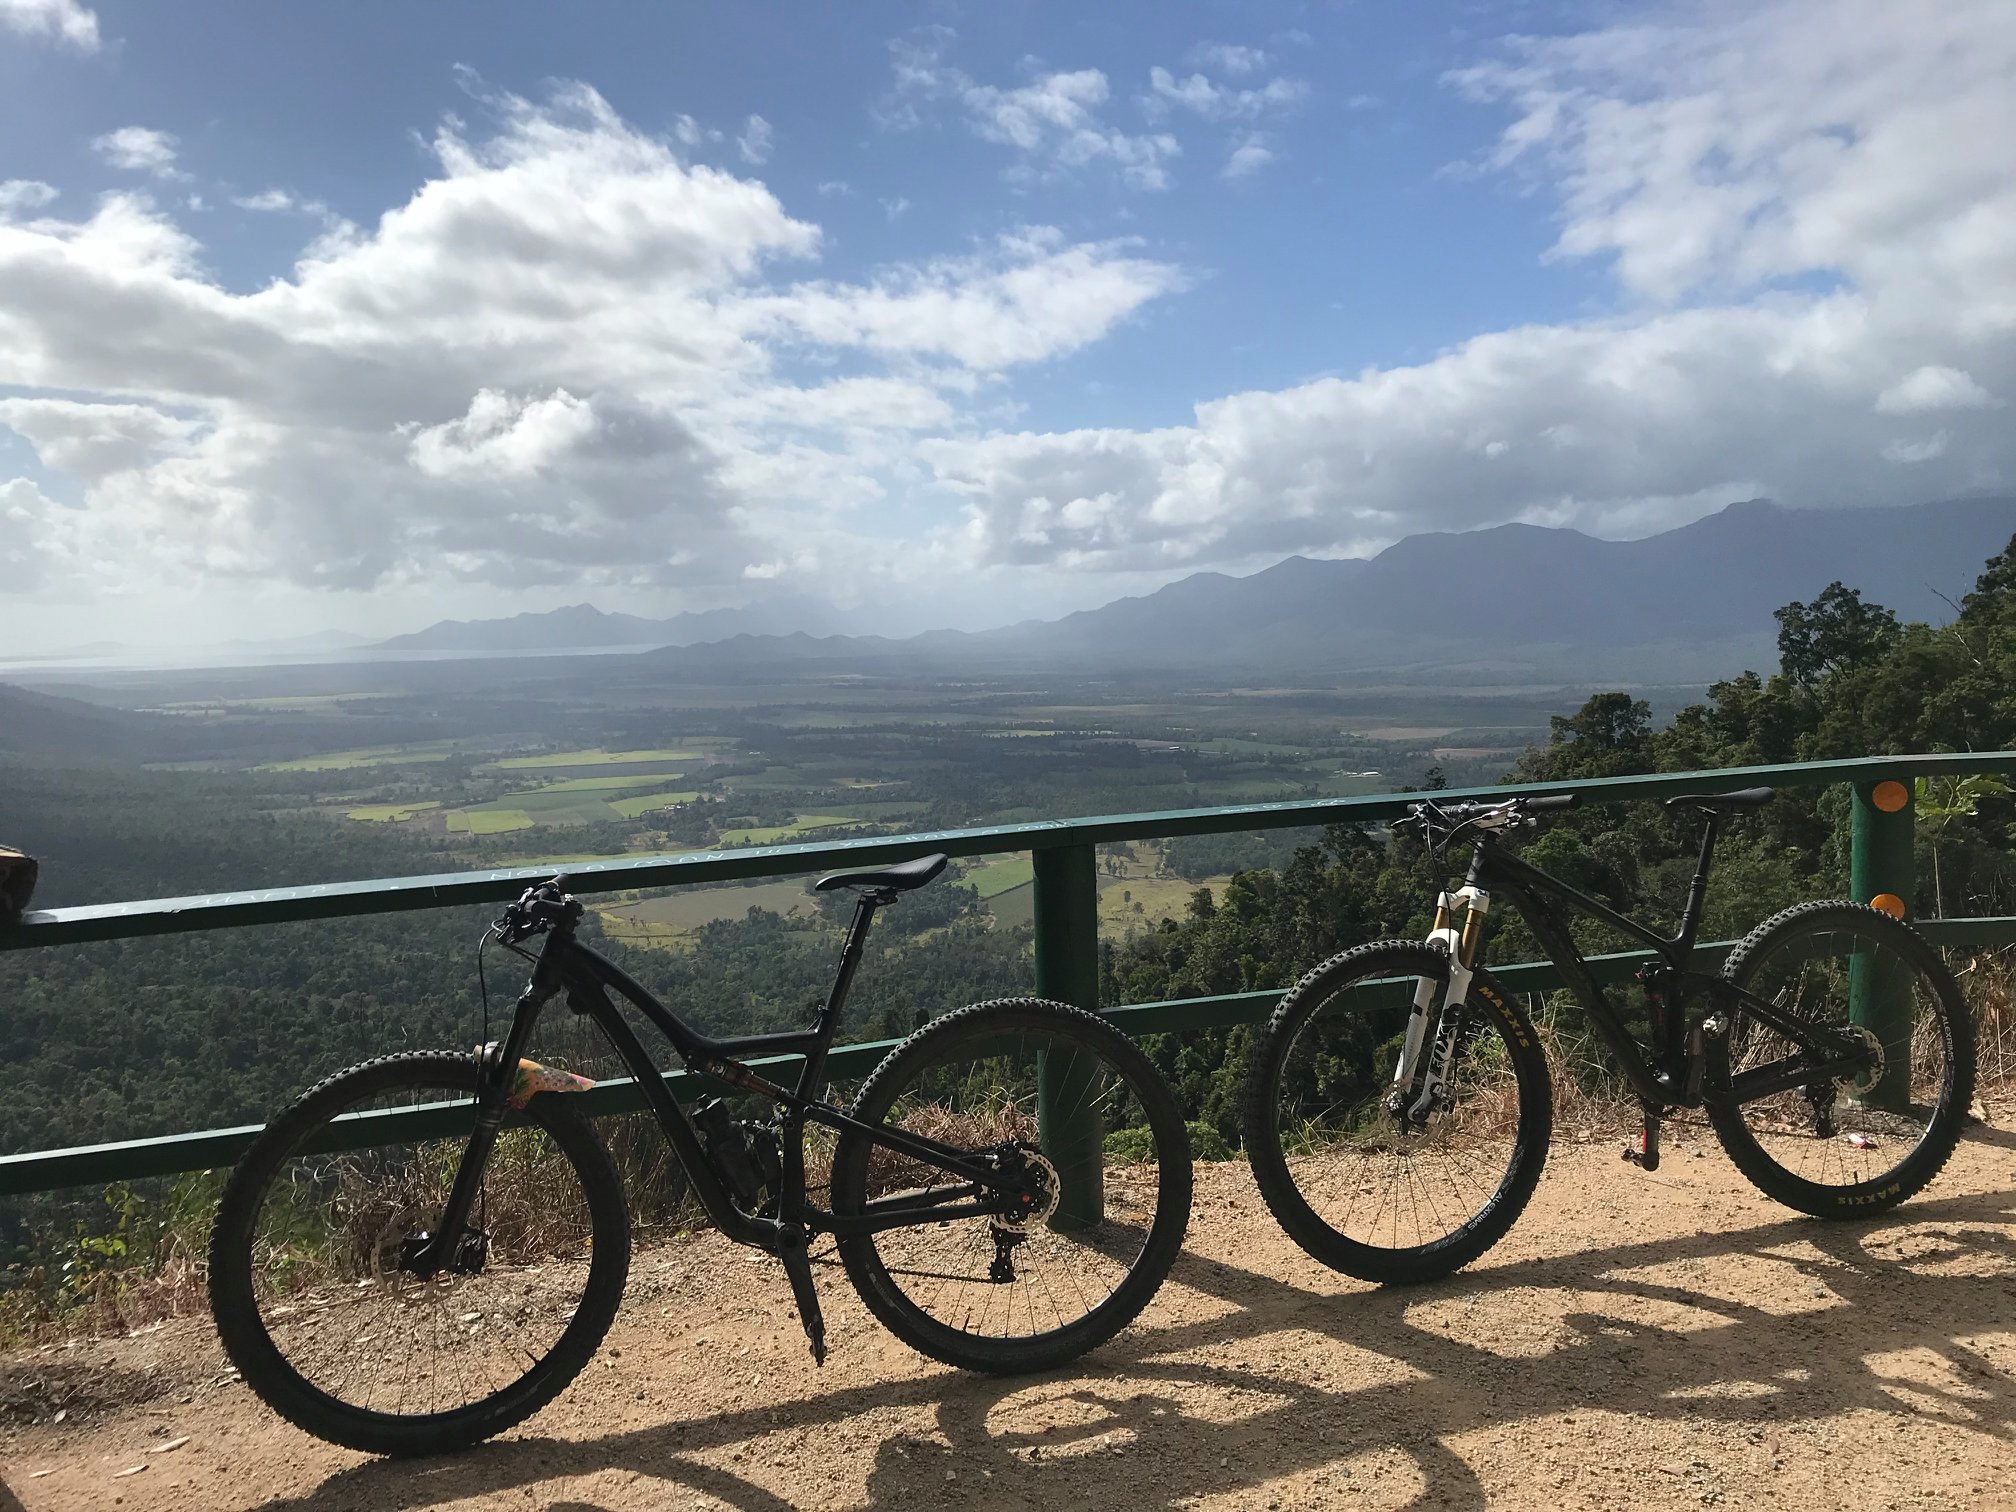 The 2019 Far North Wilderness Bike Tour